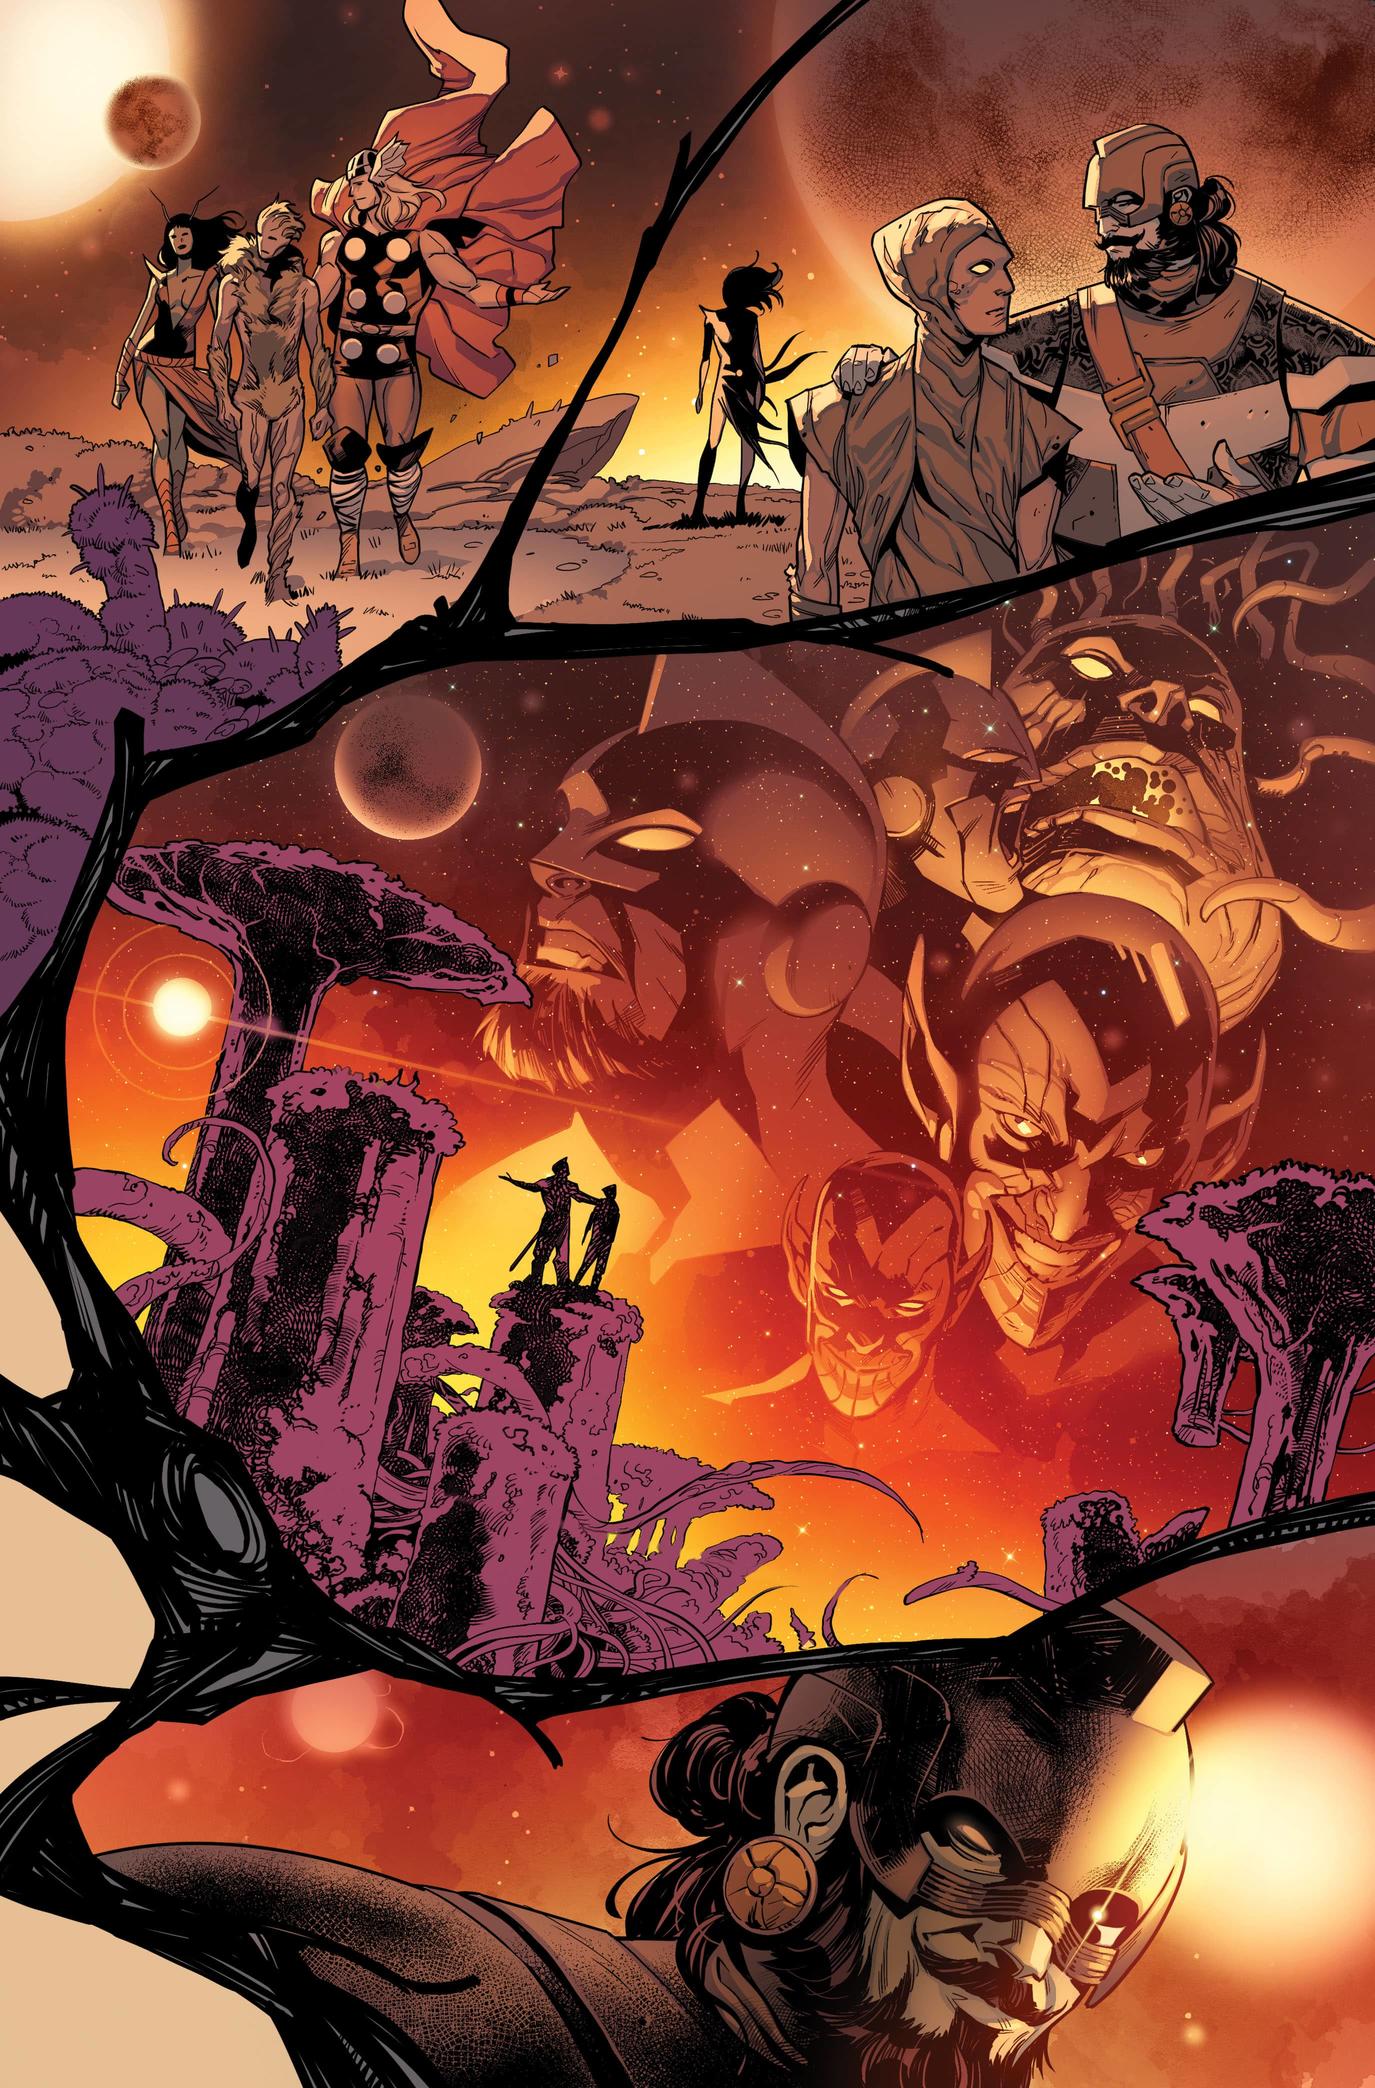 Preview de Empyre #1 - Marvel Comics - Blog Farofeiros